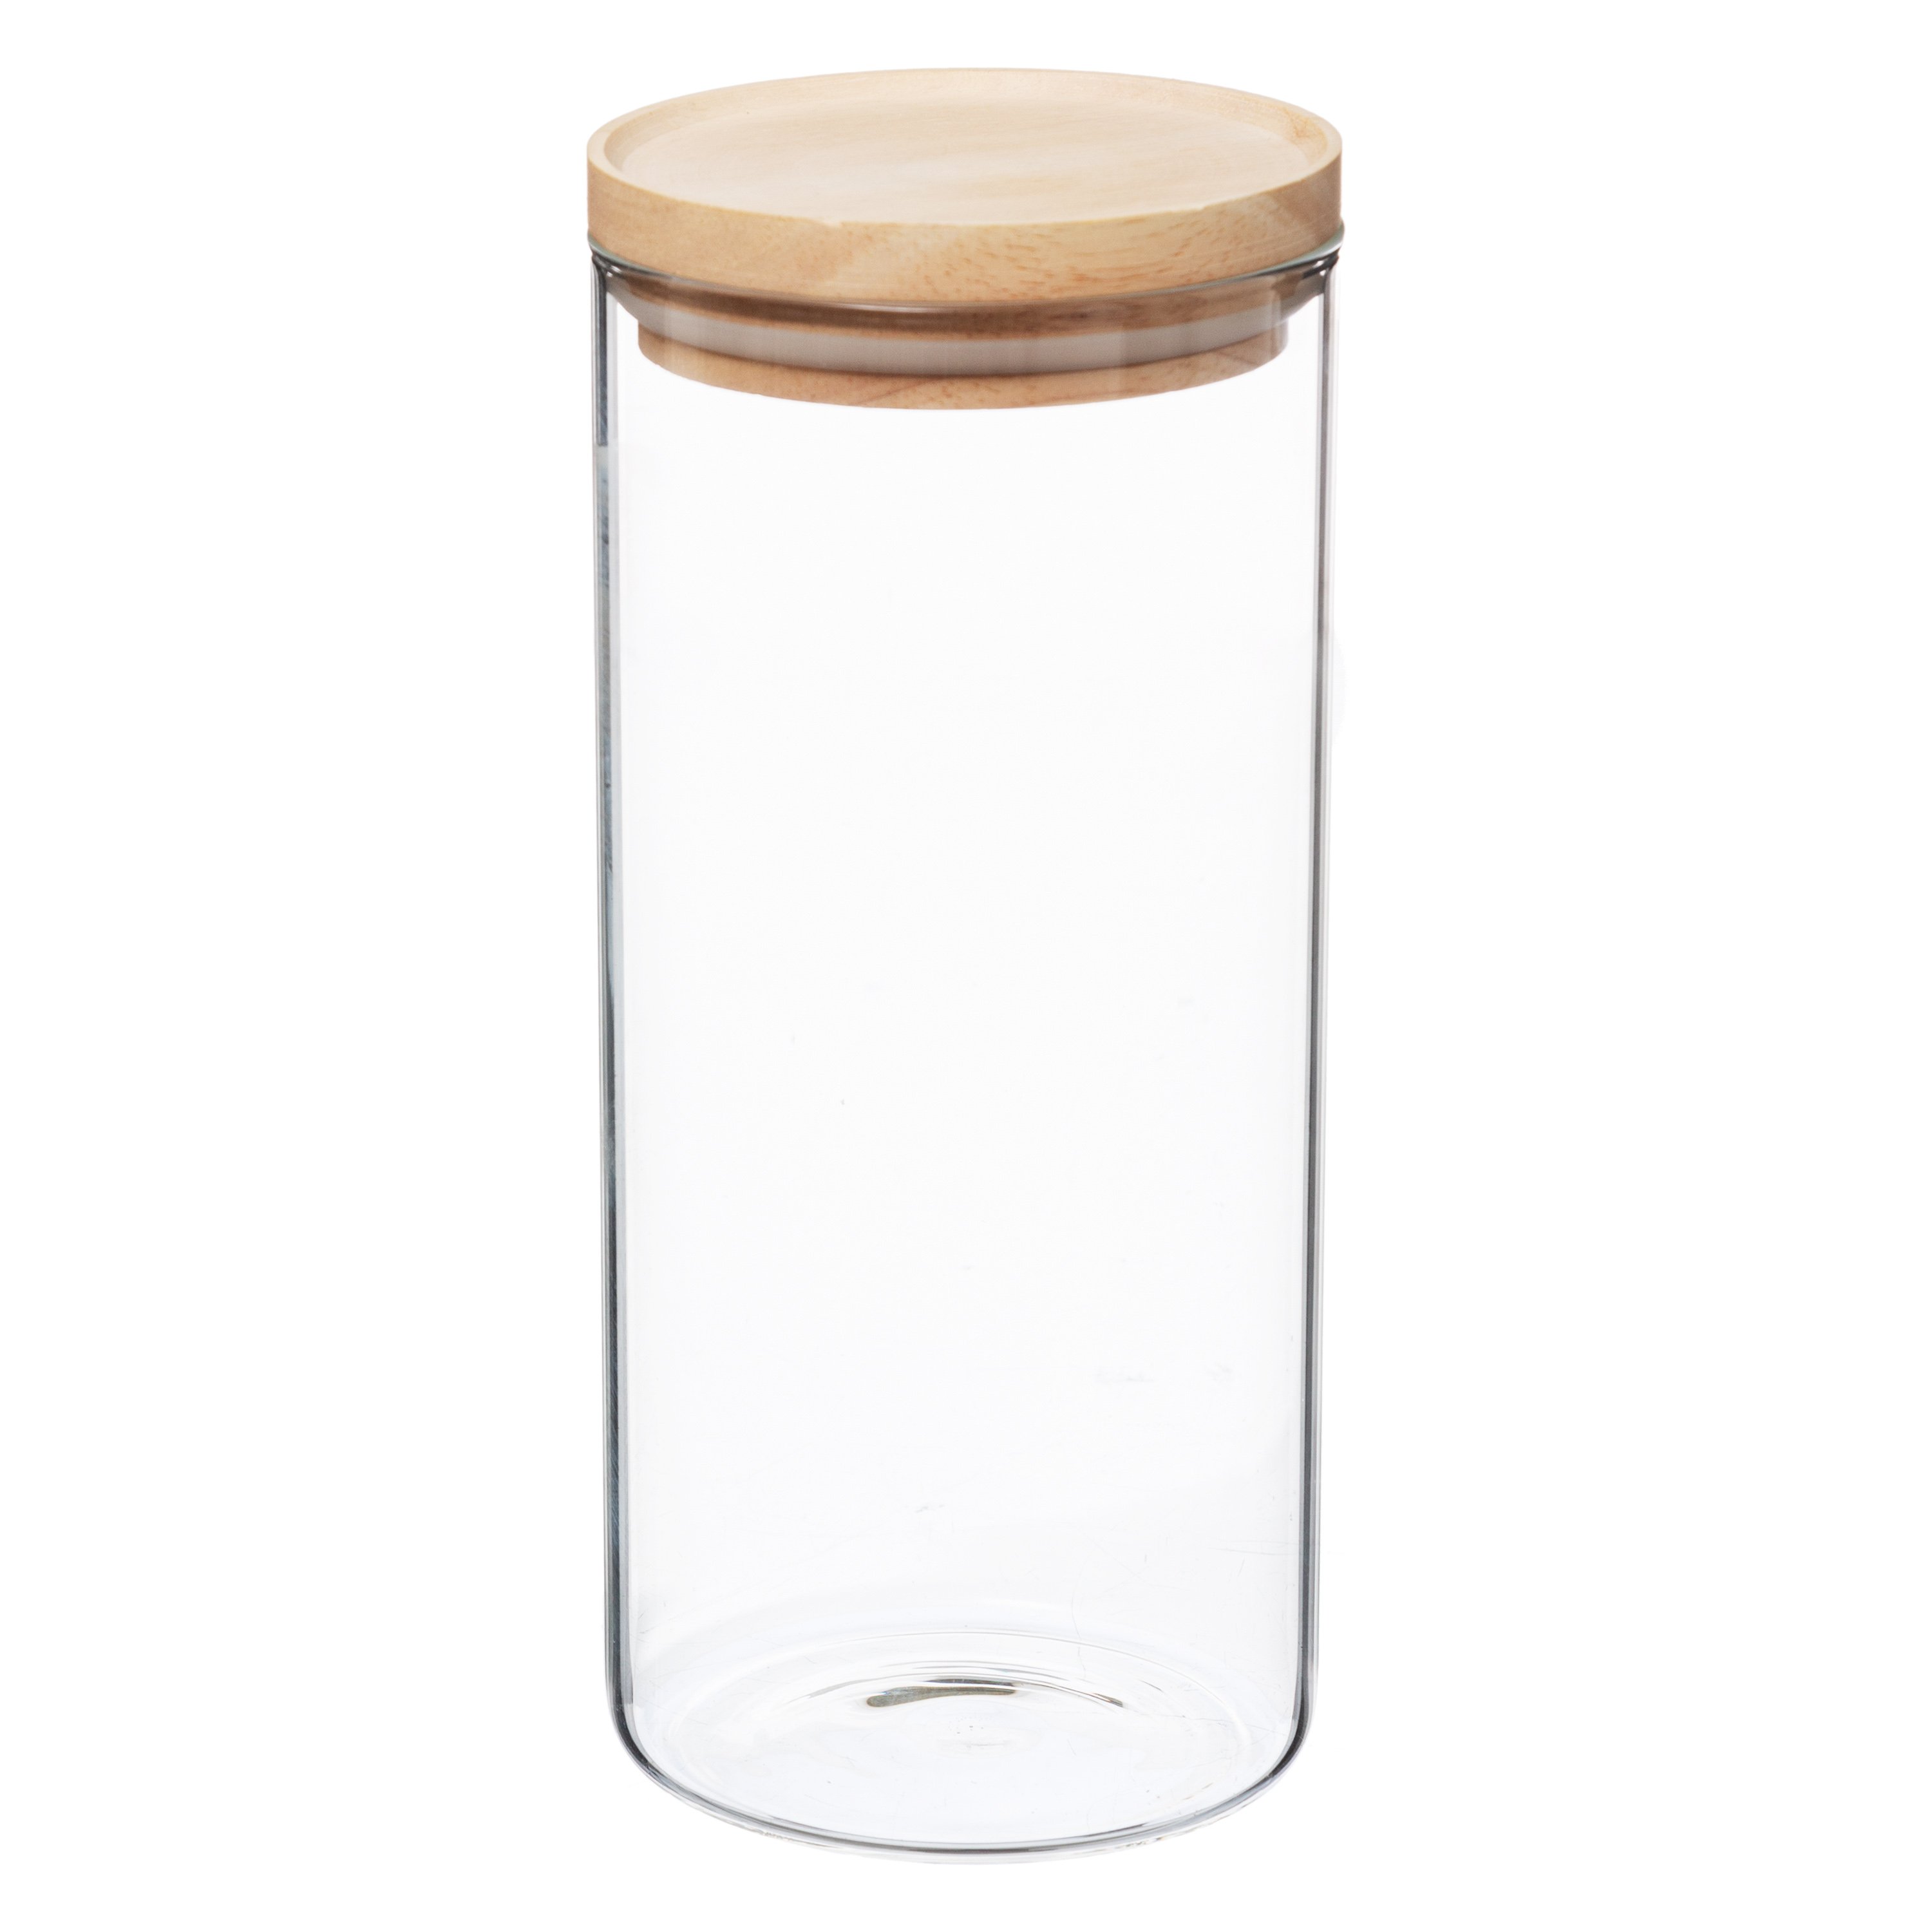 bocal verre primzie 4.25 litres - Bazari